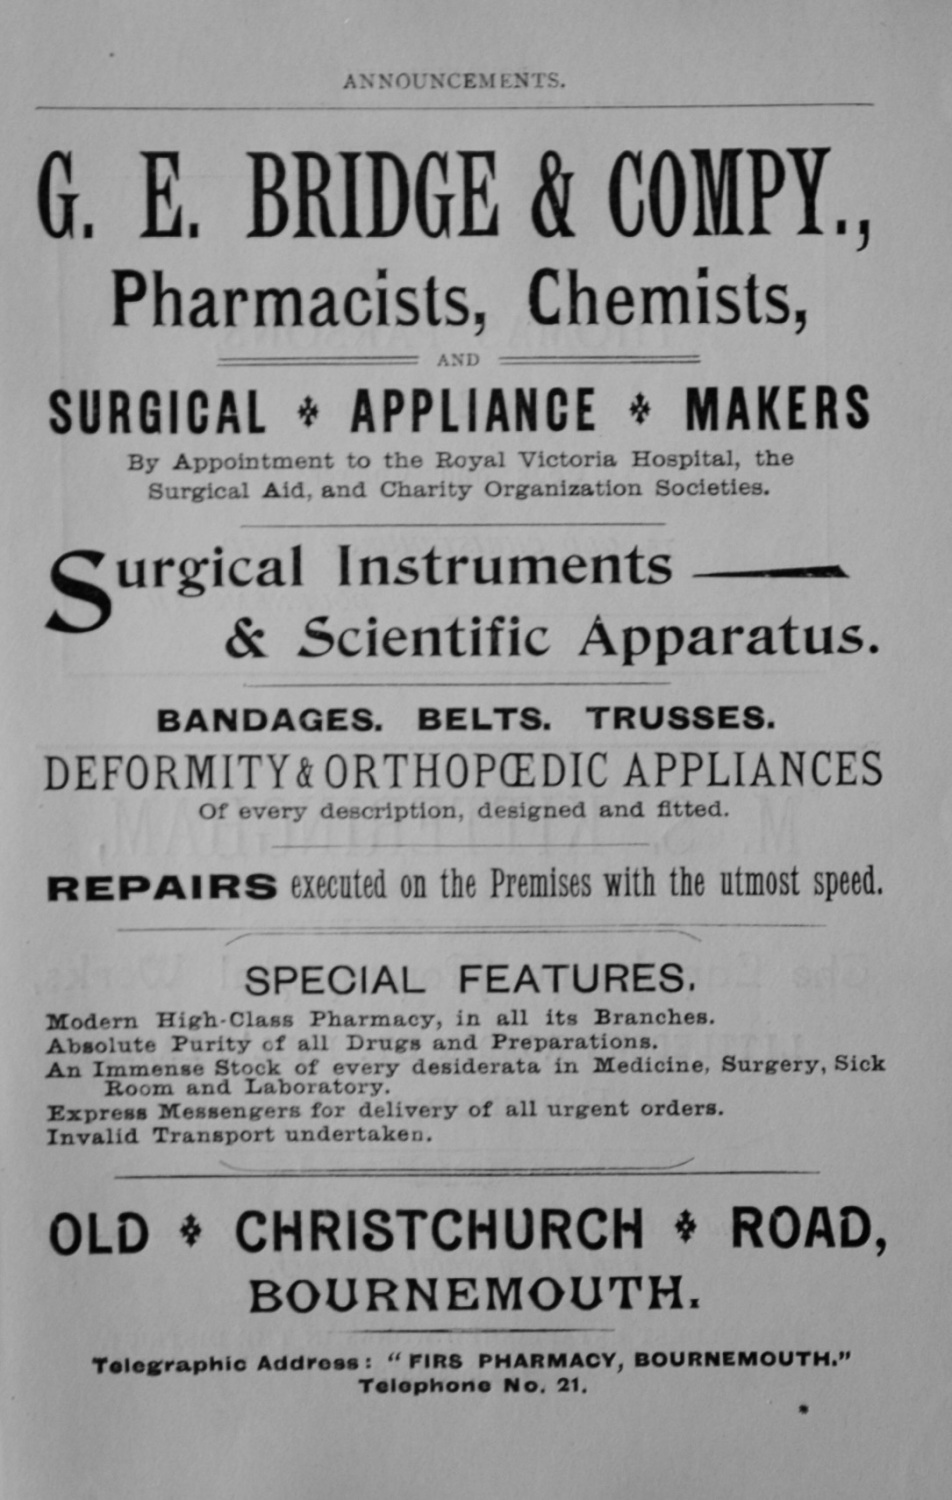 G.E. Bridge and Compy., Pharmacists, Chemists, Surgical Appliance Makers, O